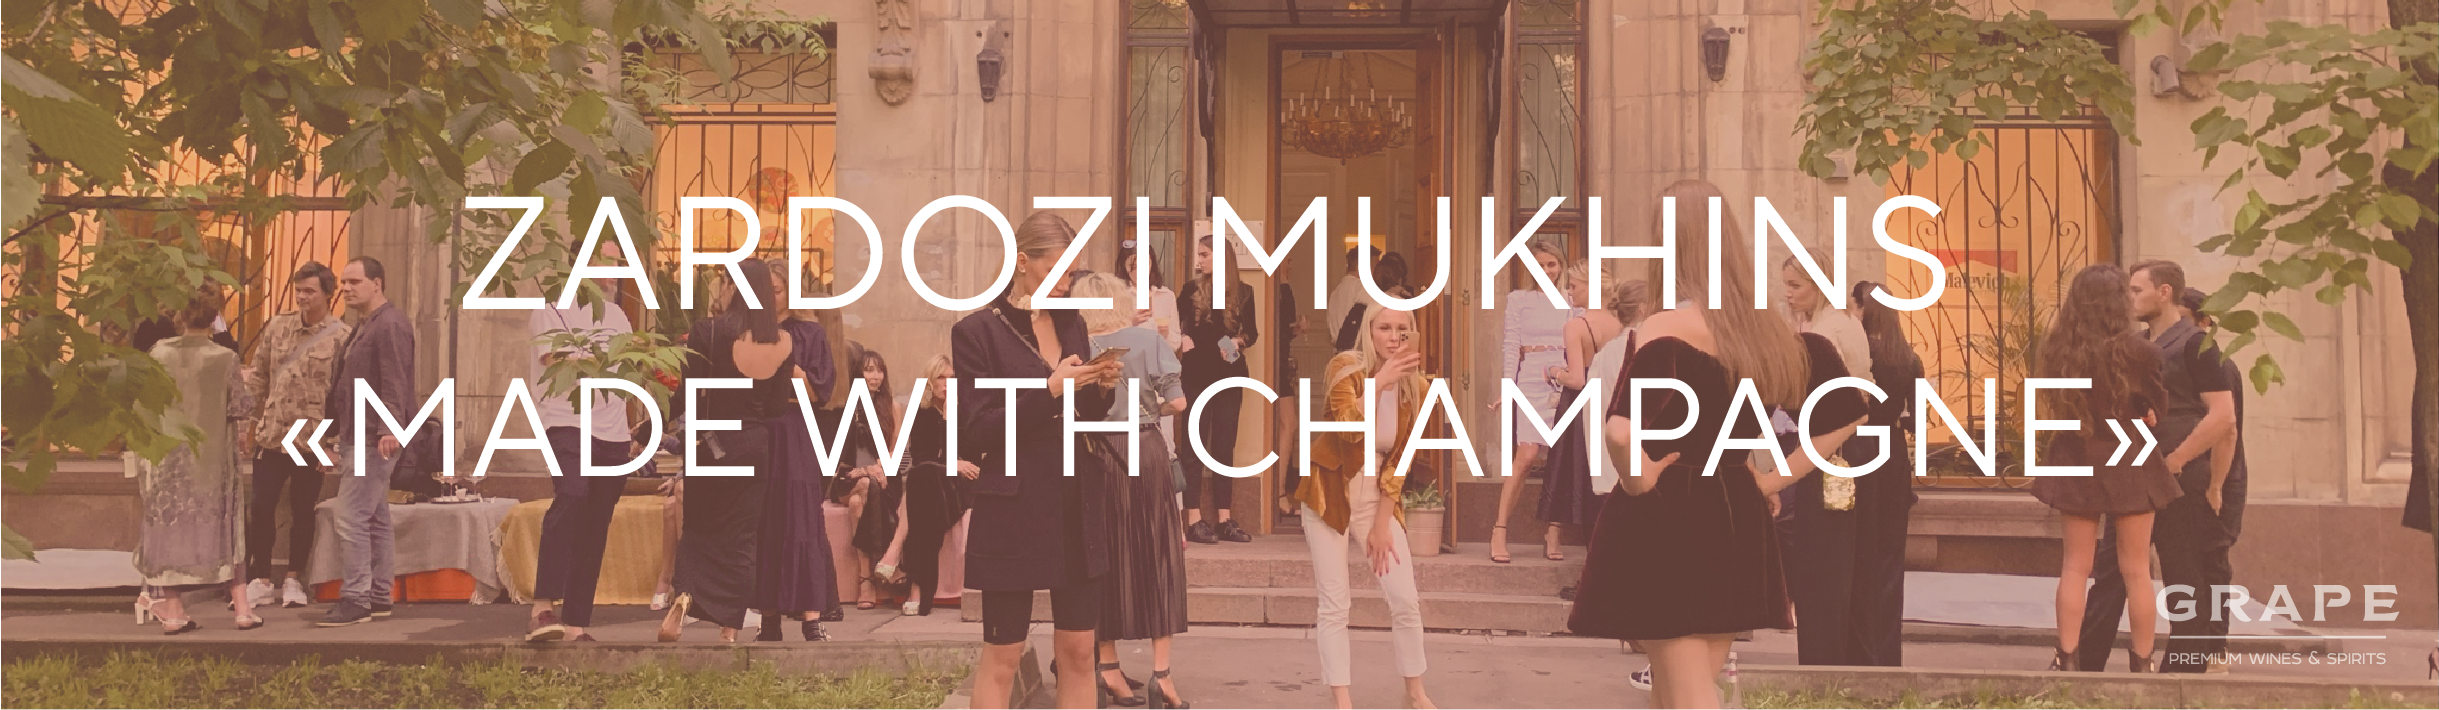 Zardozi Mukhins - Made with Champagne